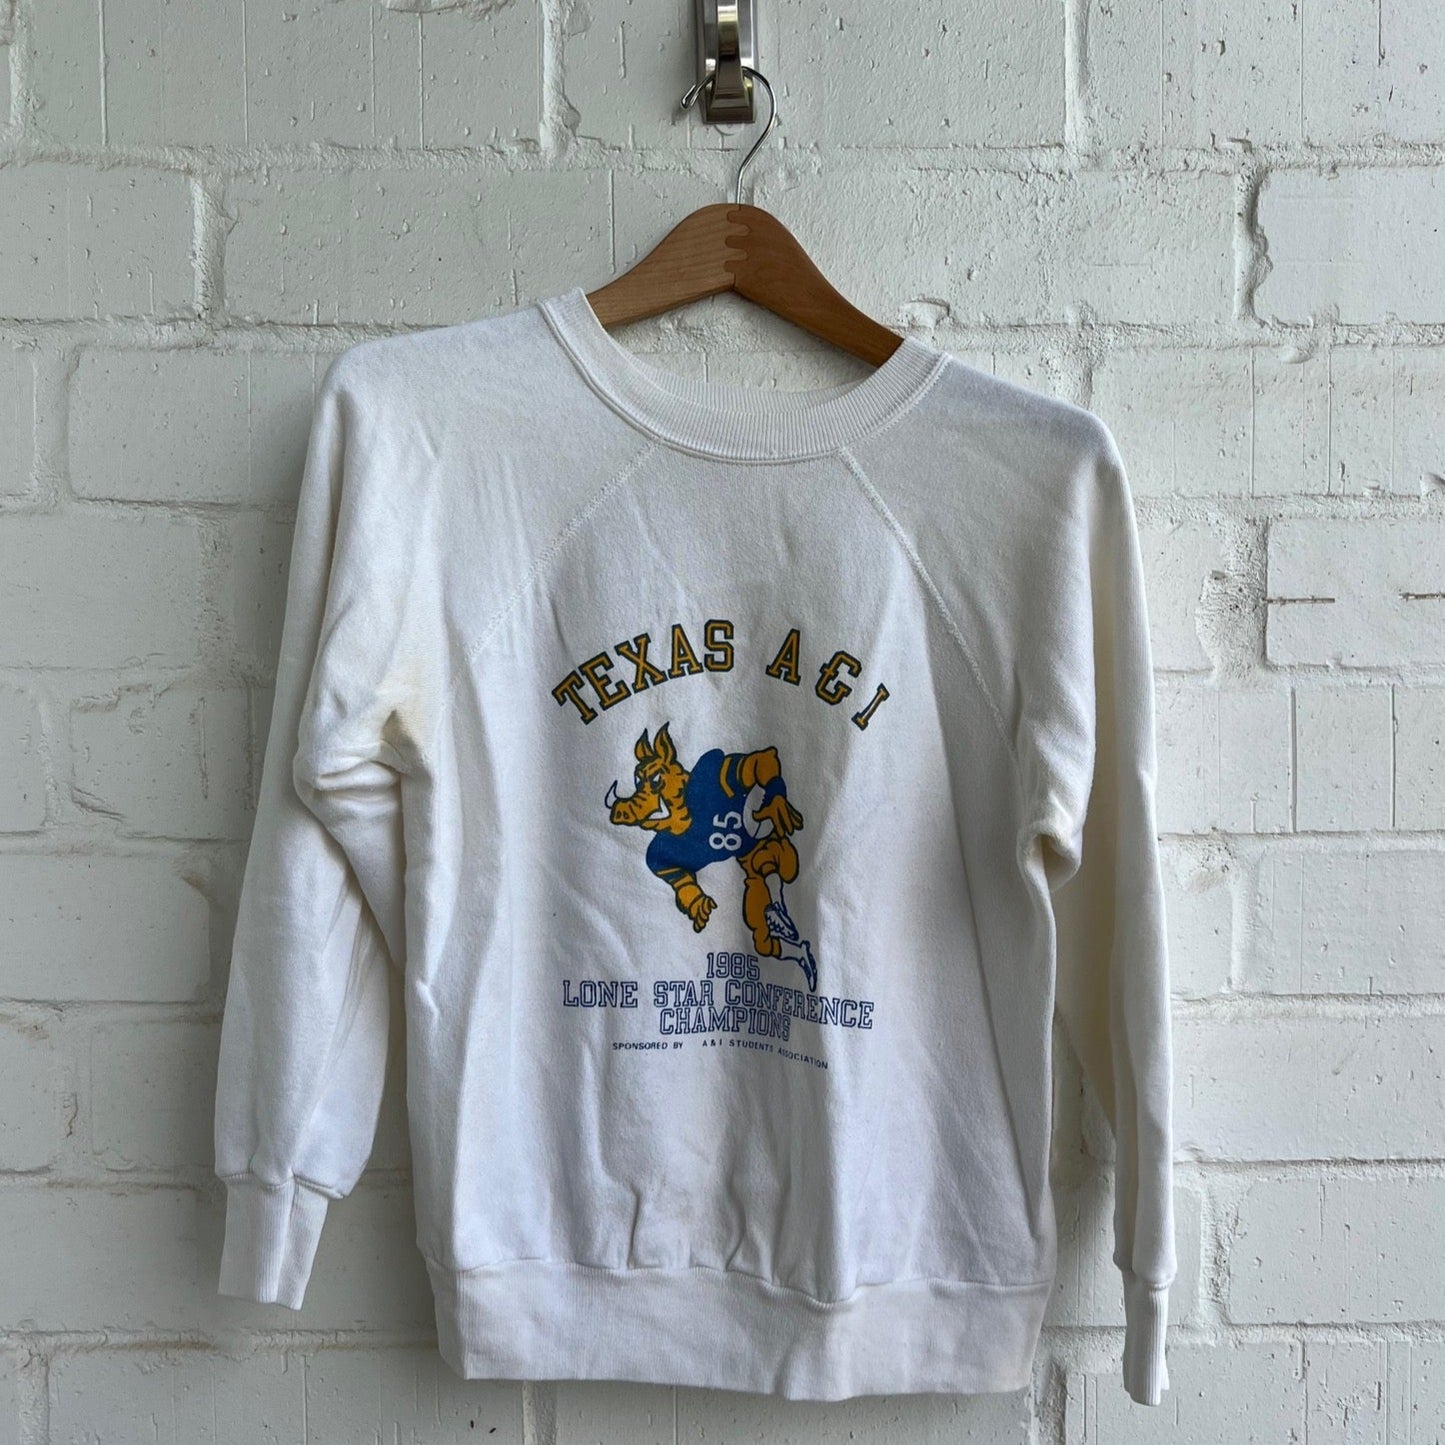 Vintage 1985 Texas AGI Crew Neck Sweatshirt